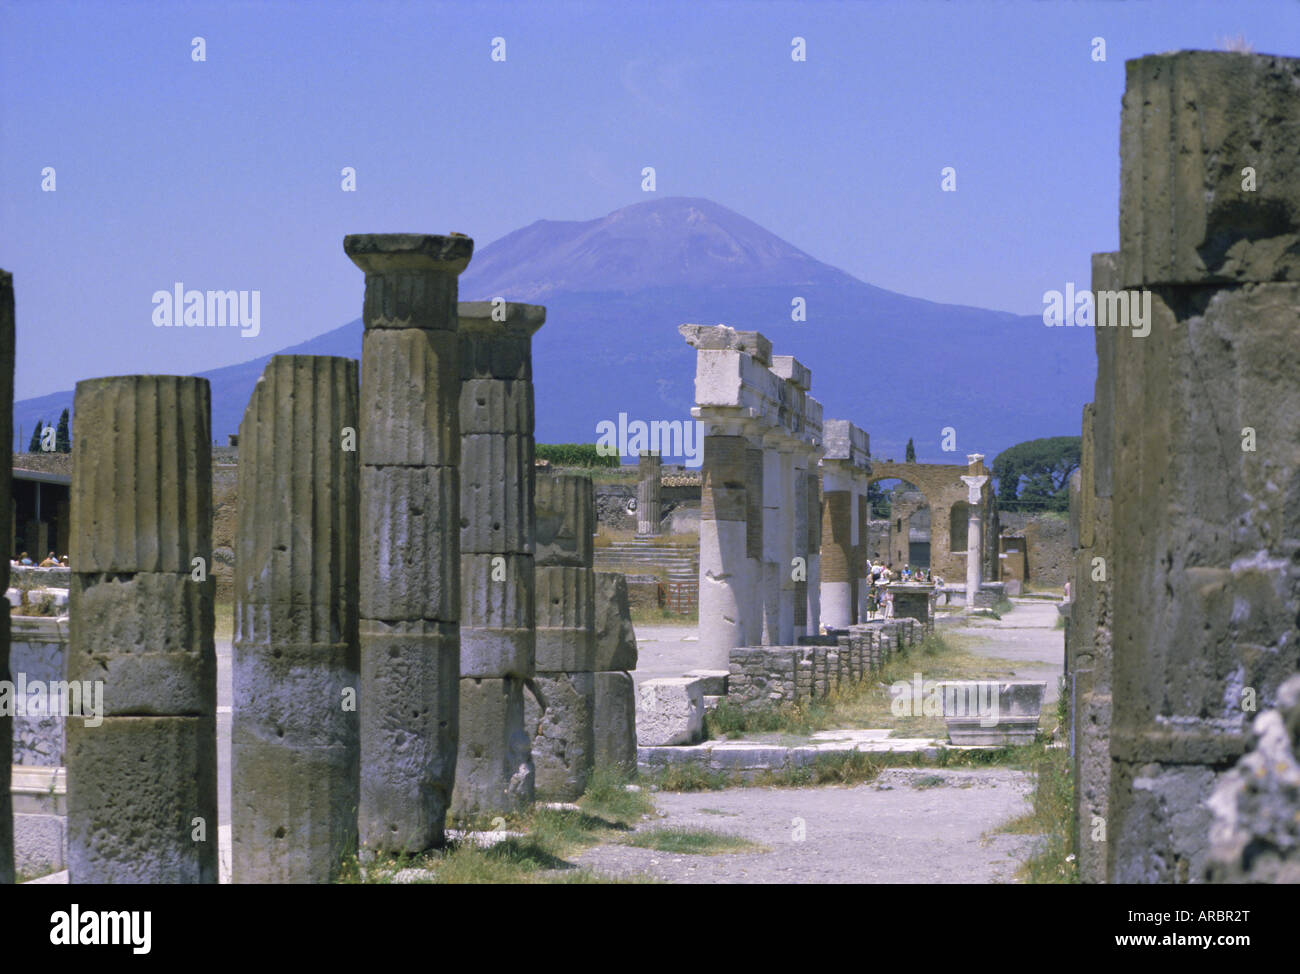 Mount Vesuvius, Columbus basalt lava marble and brick, Pompeii, Campania, Italy Stock Photo